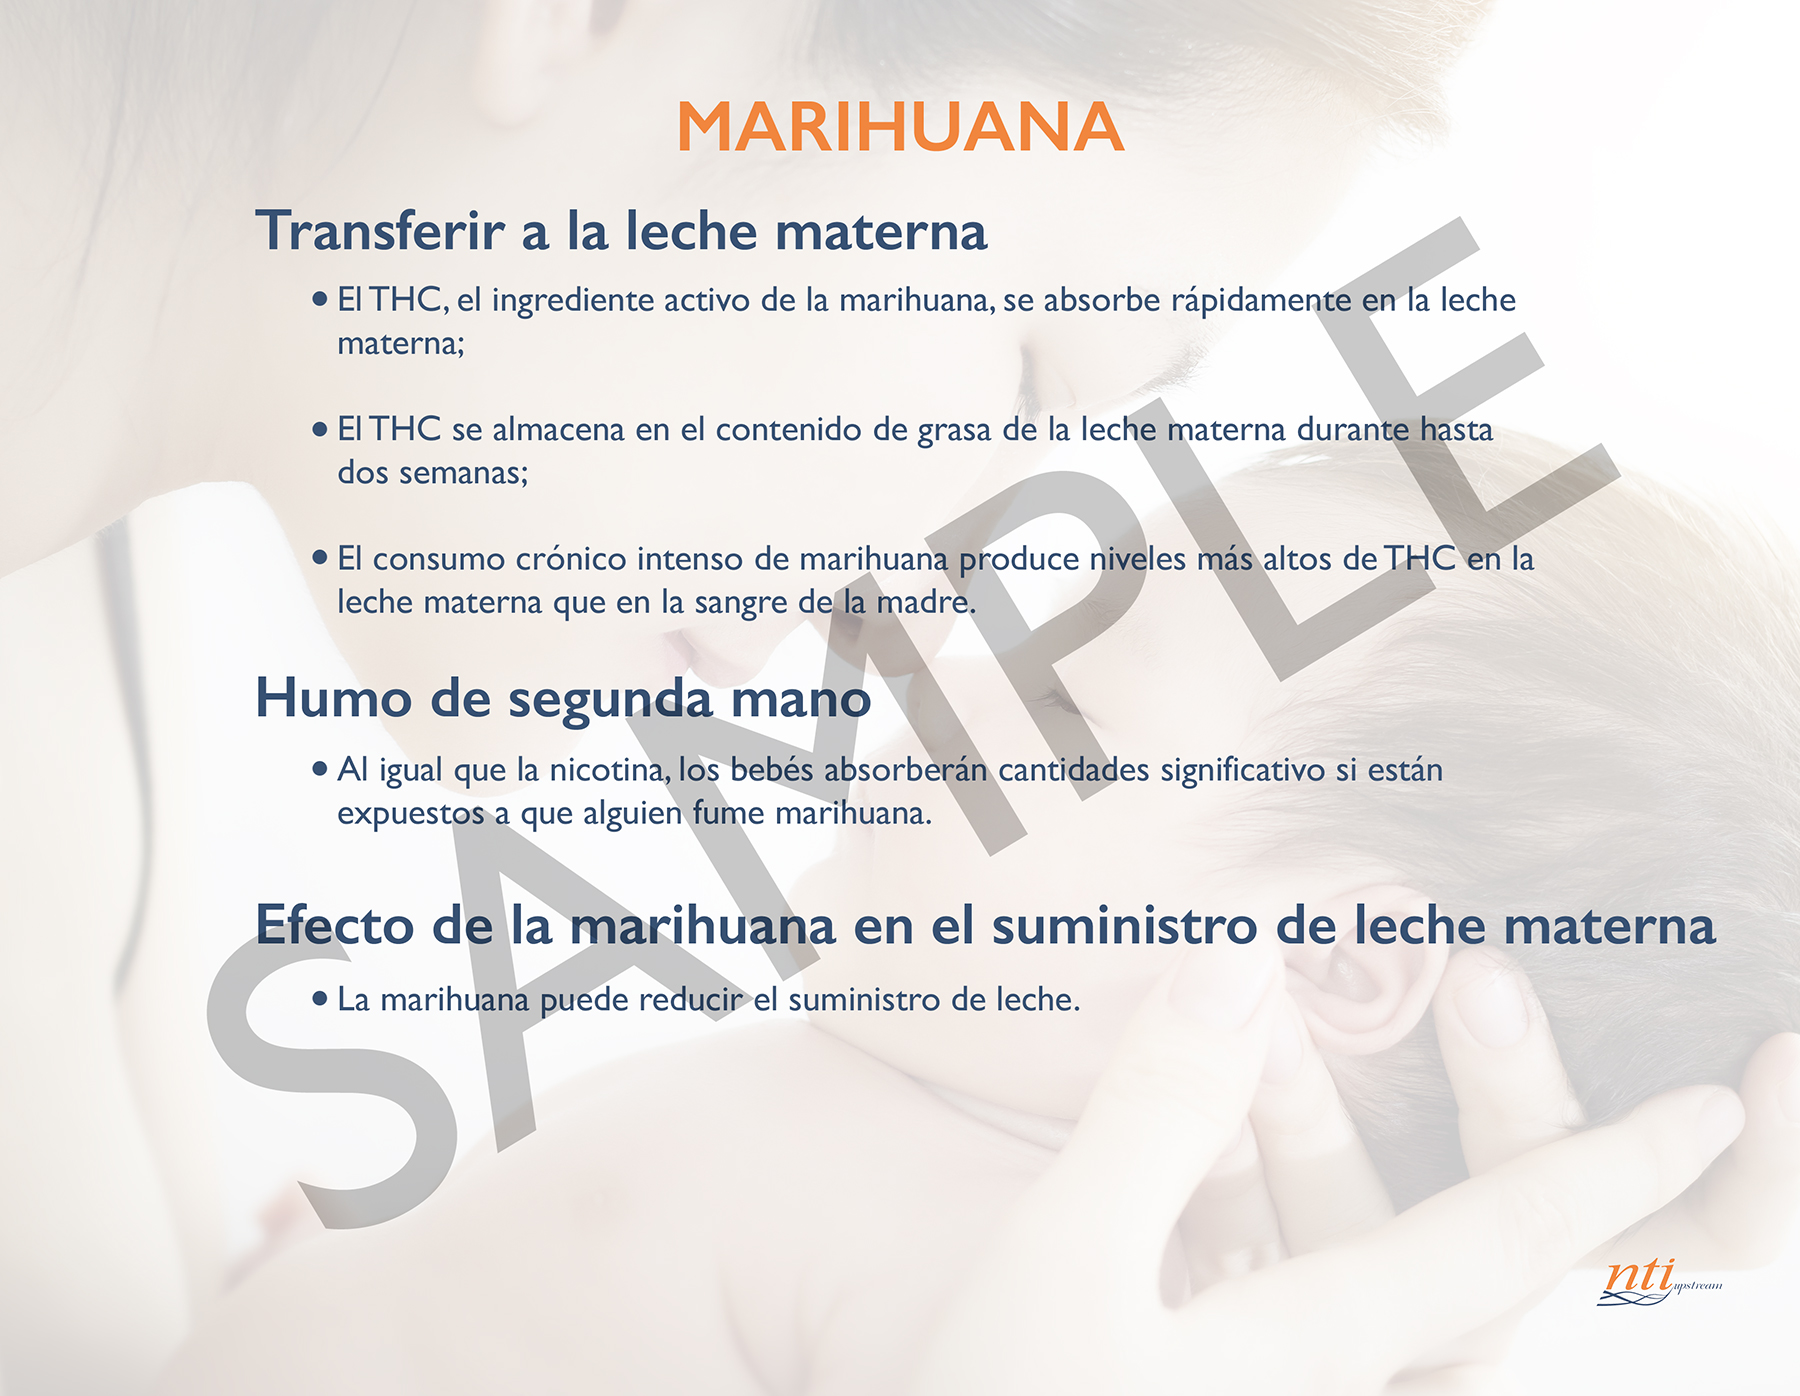 Marijuana_Spanish_page1_bleeds_SAMPLE.jpg